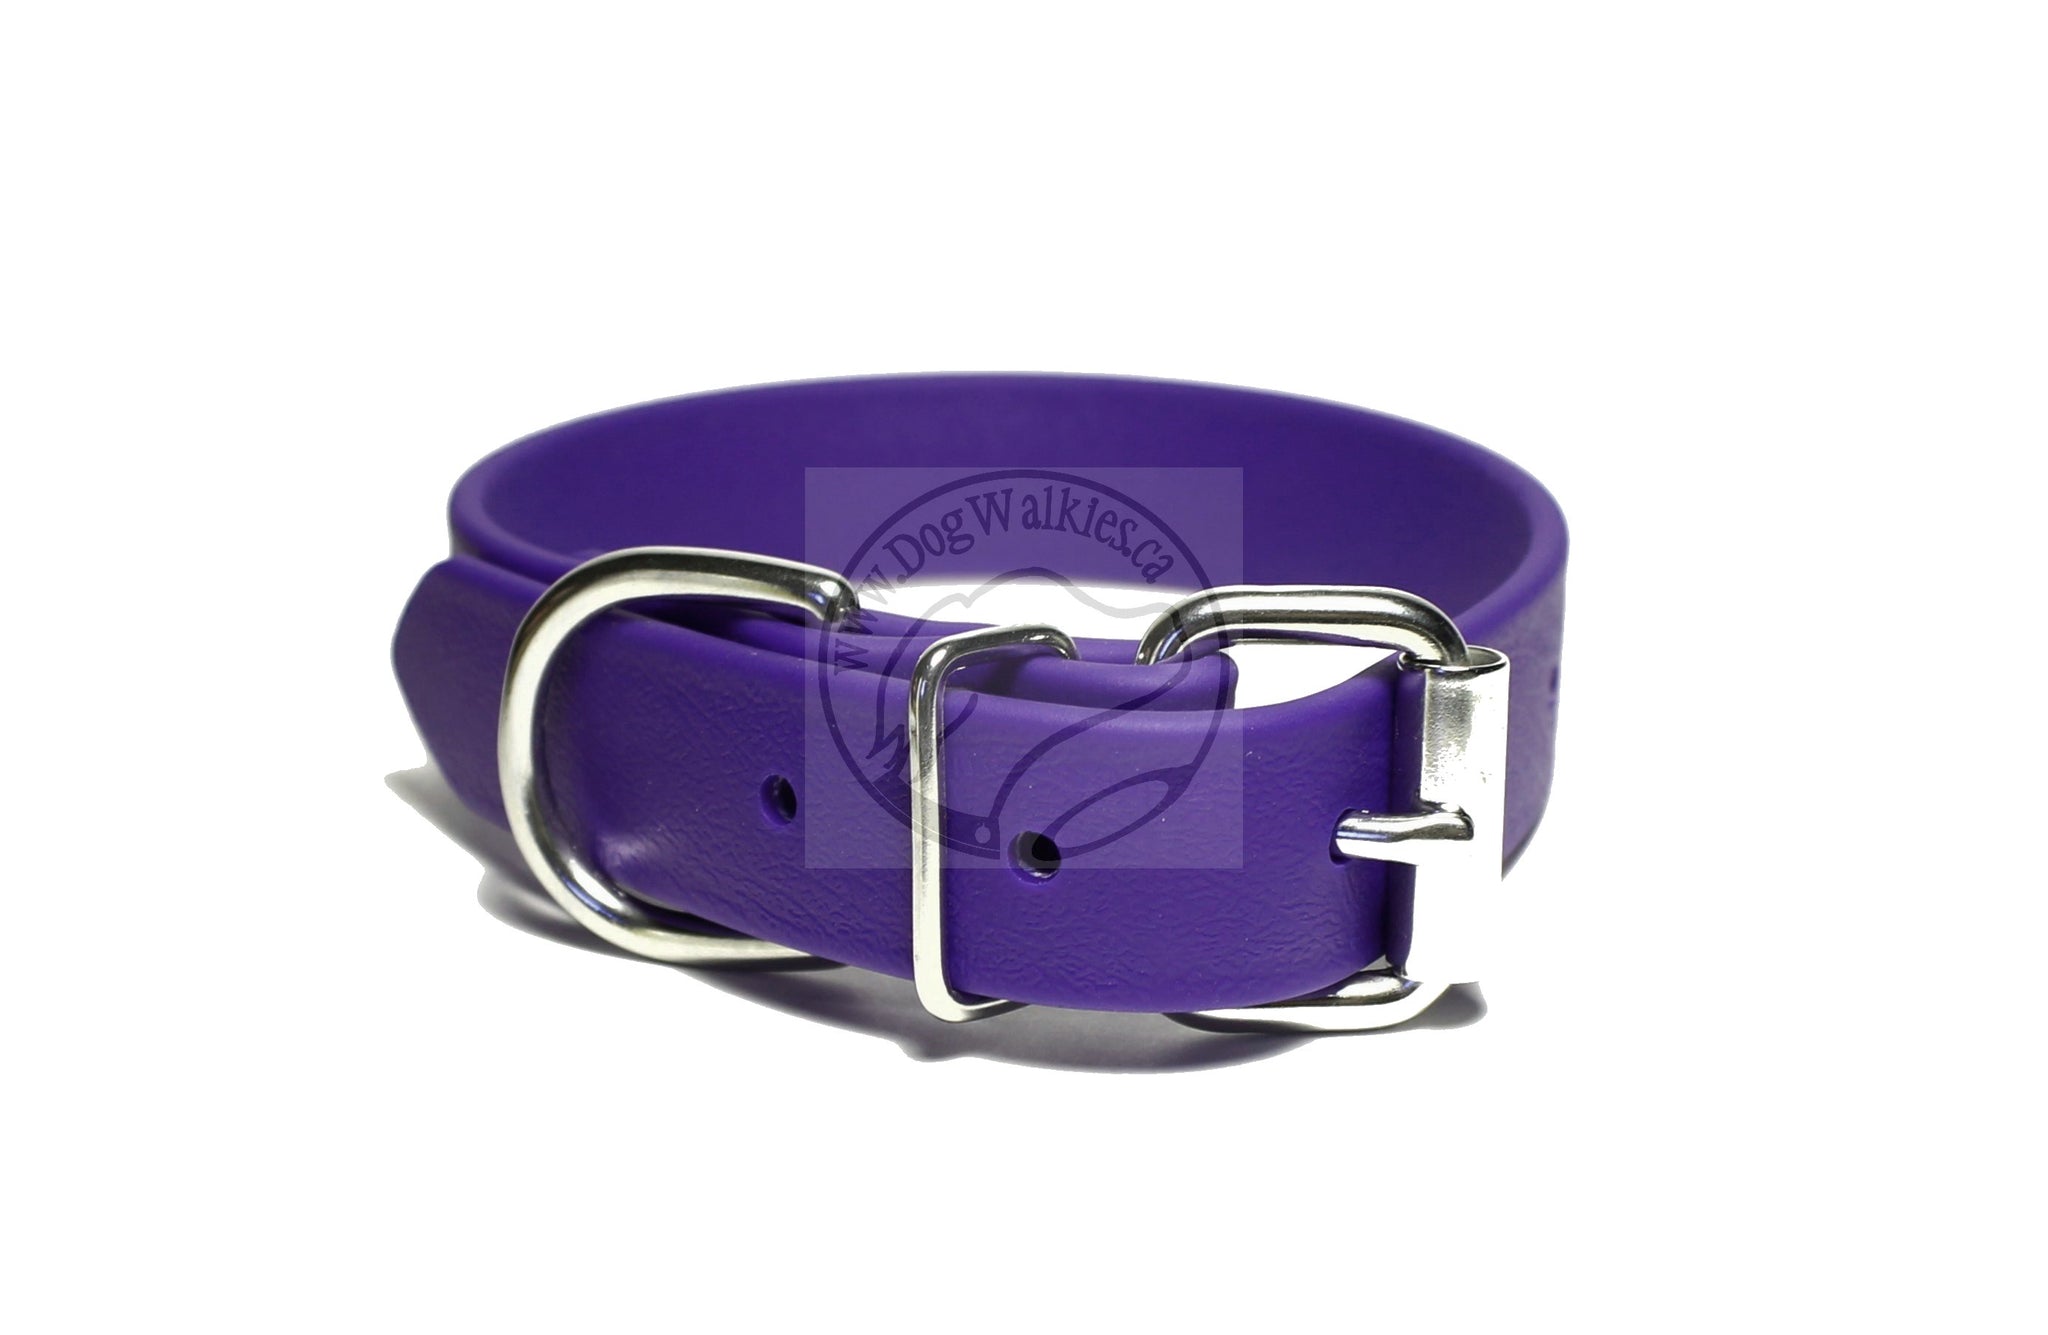 Royal Purple Biothane Dog Collar - 1 inch (25mm) wide